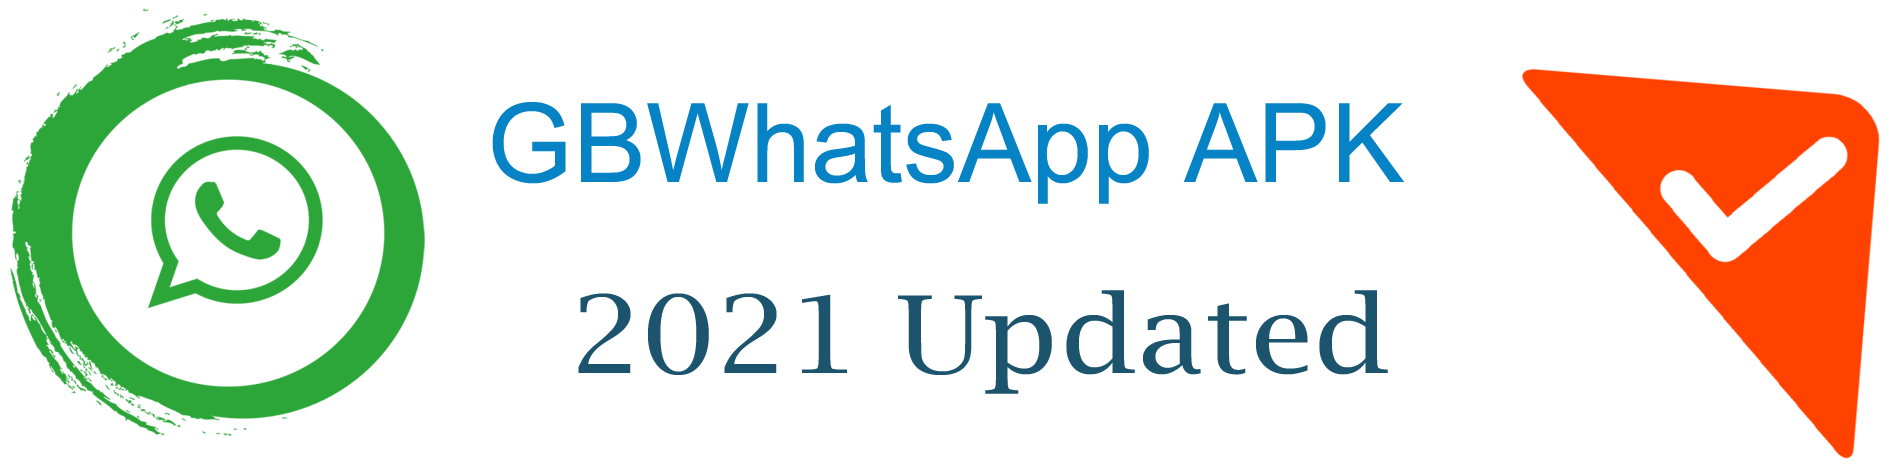 gb whatsapp latest version 4.16 download